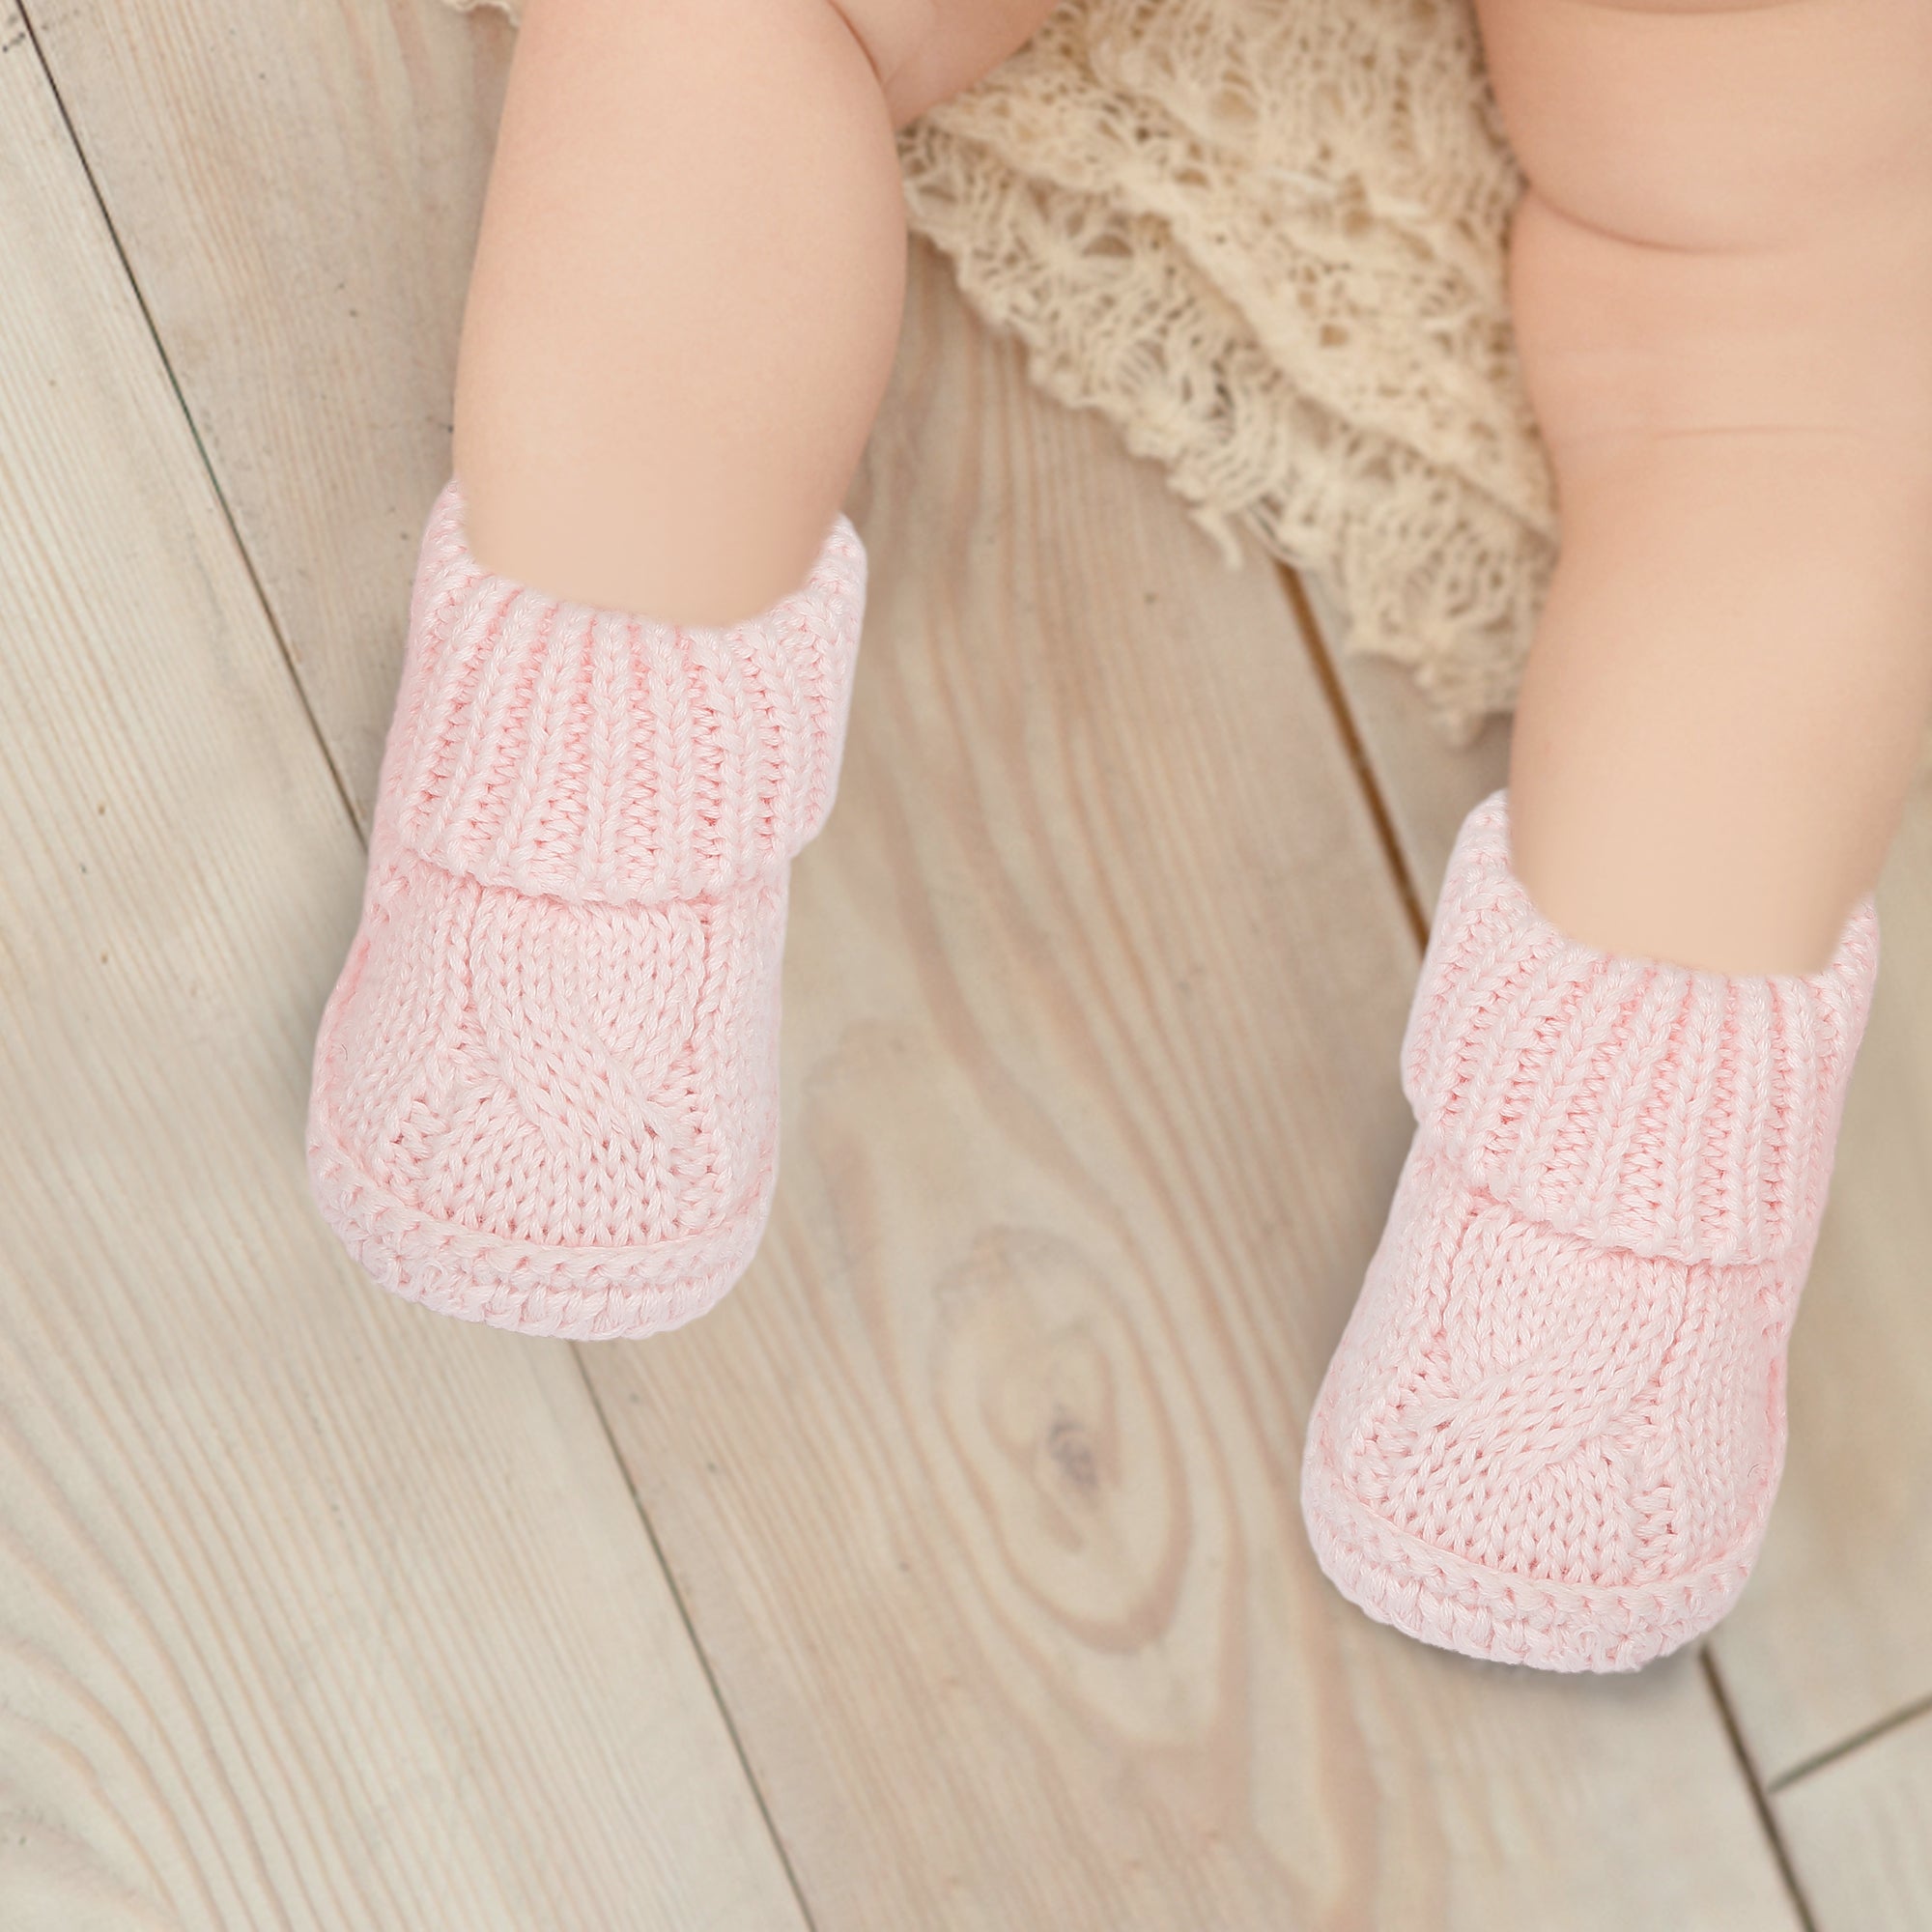 Baby Moo Knitted Newborn Crochet Socks Booties - Peach